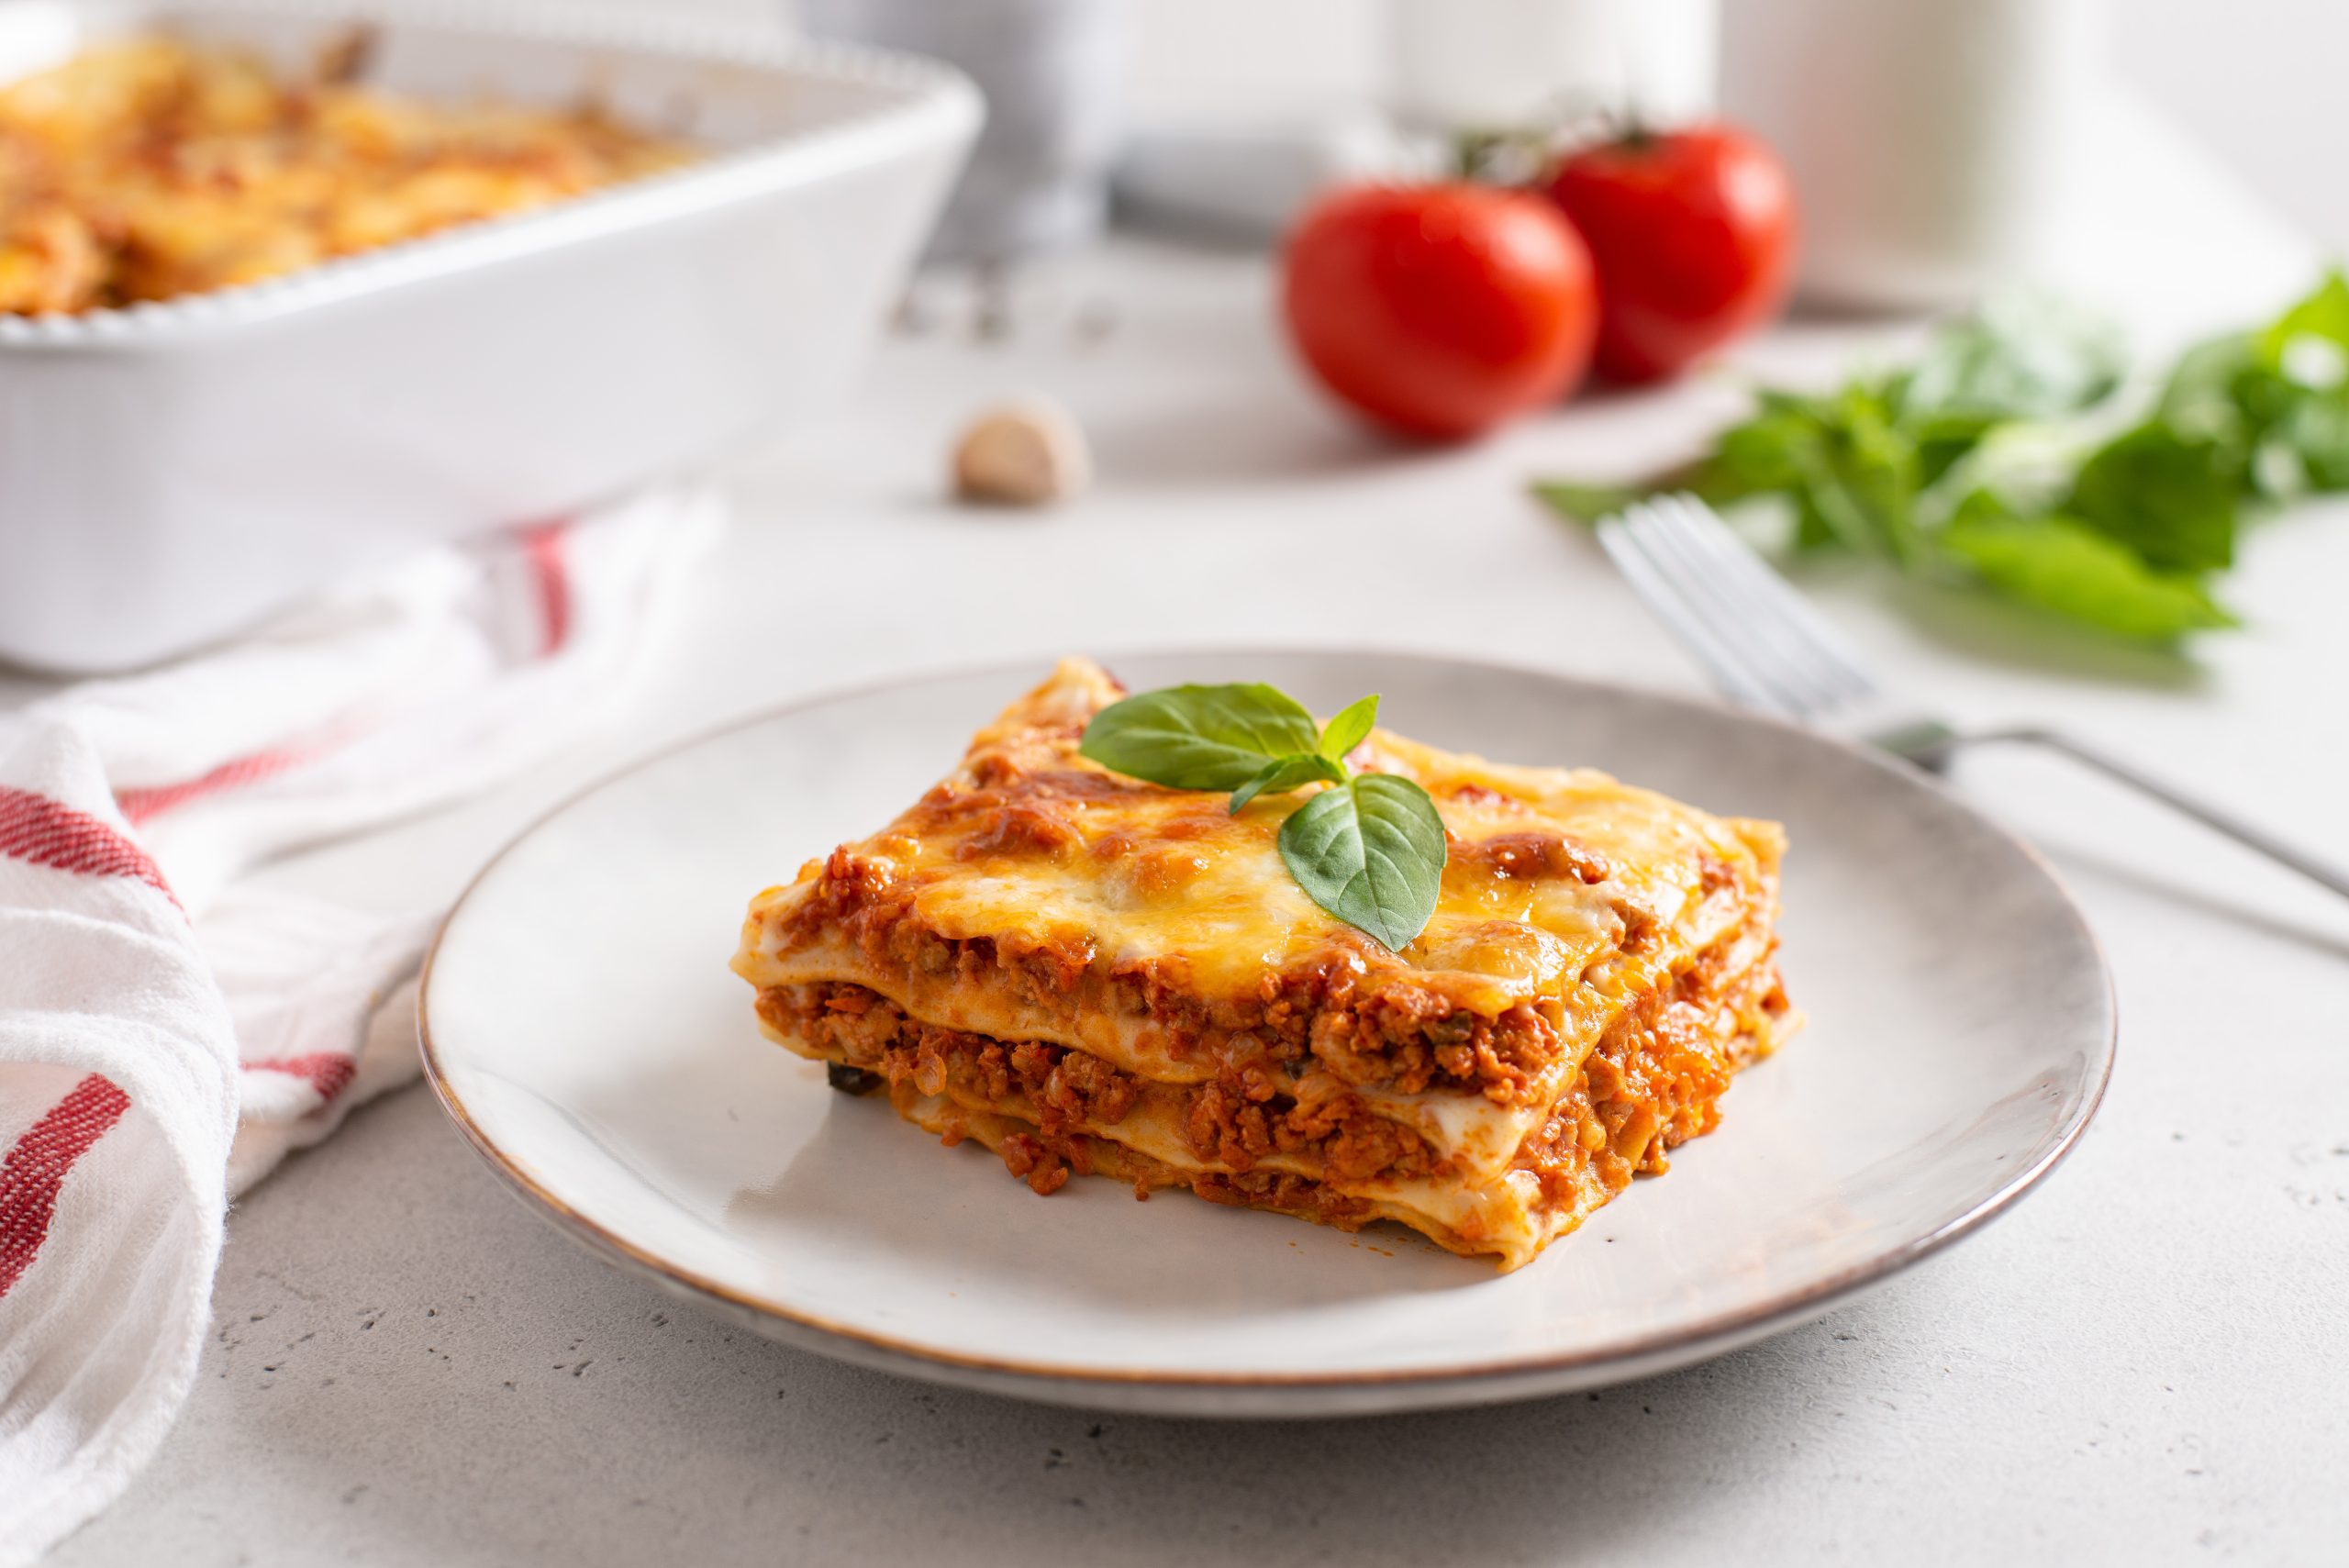 Layered Love: My Lasagna Masterpiece - Fresh recipes, ingenious meal ...